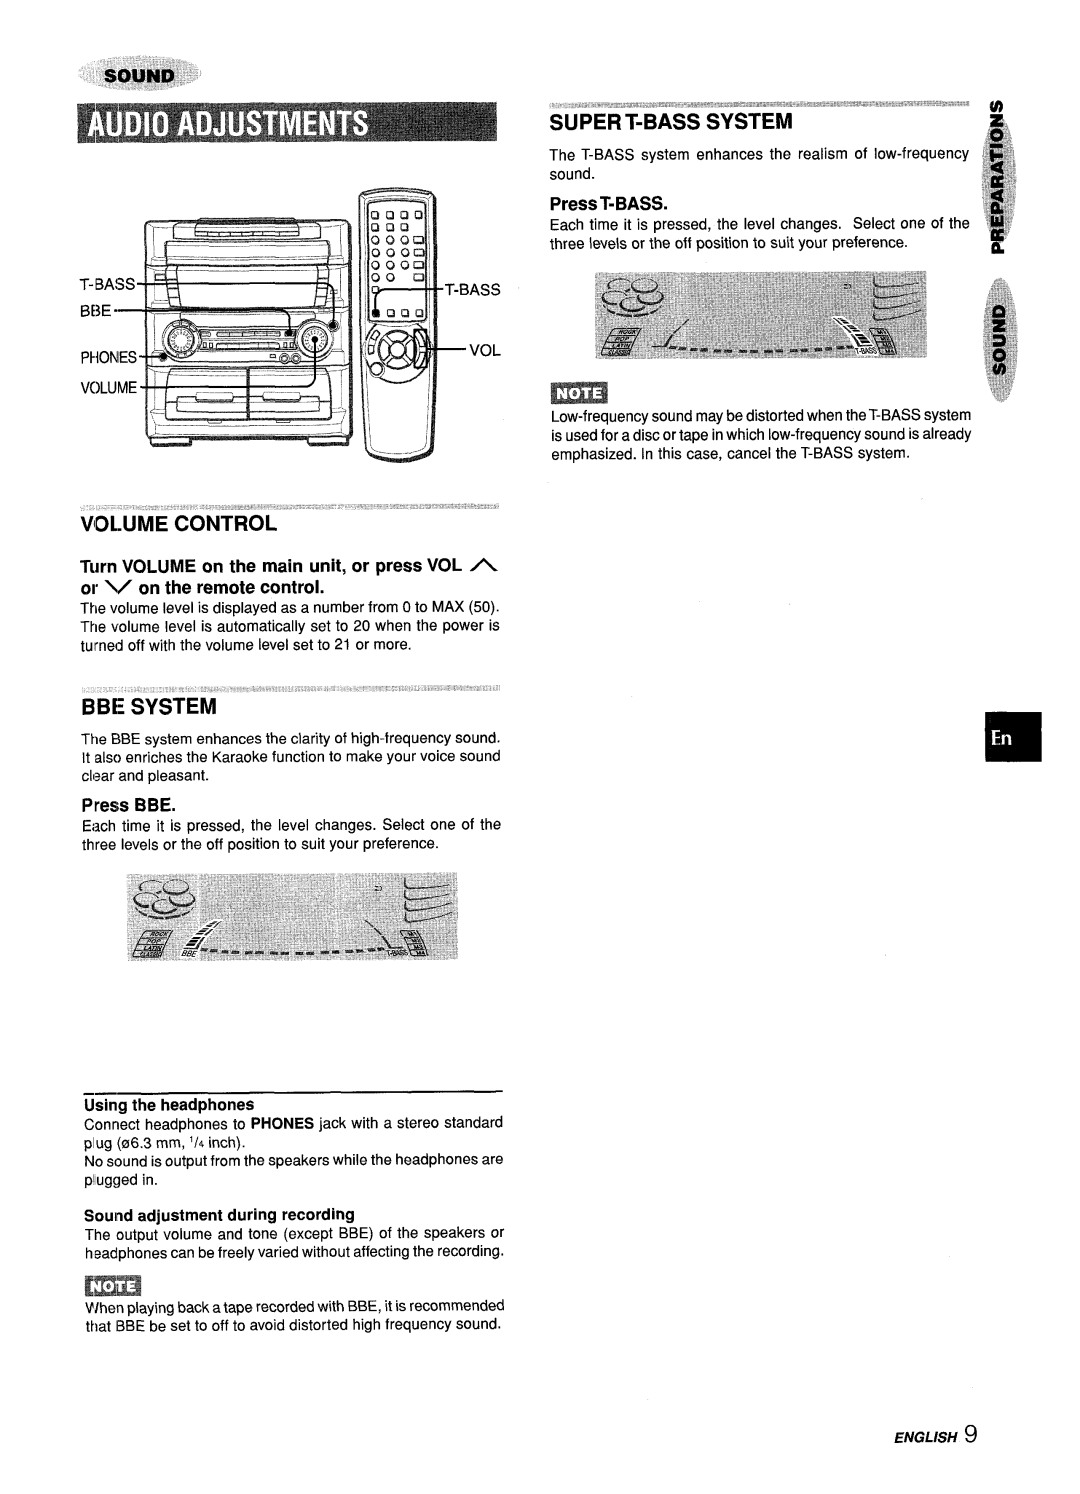 Aiwa Z-L70 manual Press T-BASS, 3,gg ~=.,r, Using the headphones, Sound adjustment during recording, English 